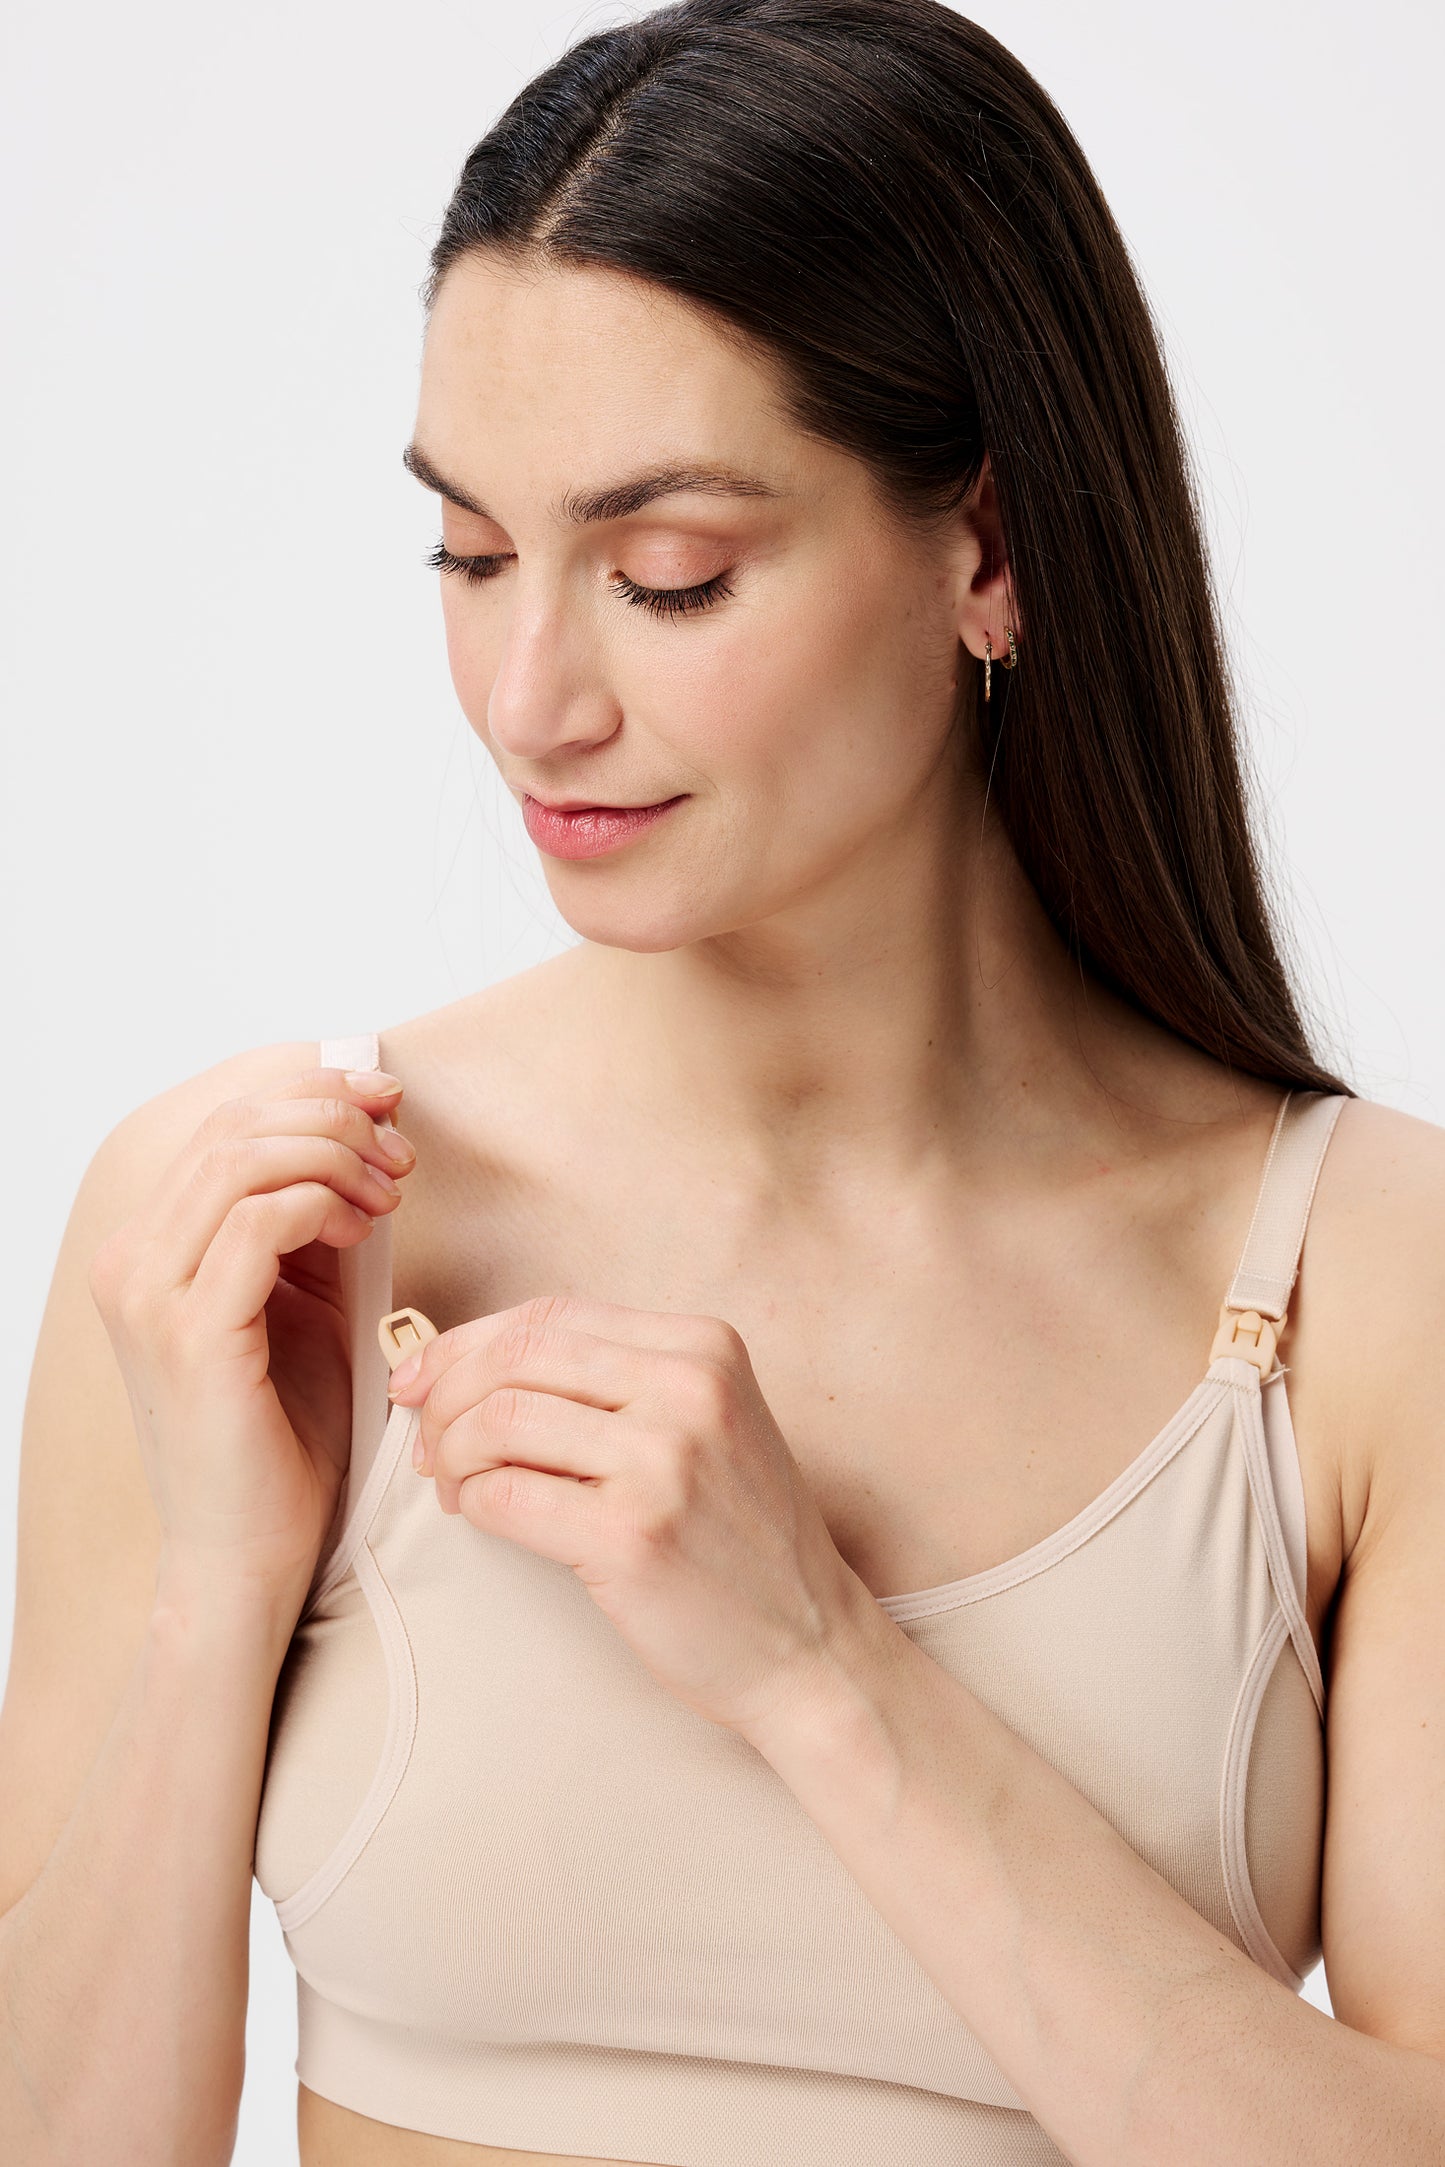 Mae seamless Sensil® pumping bra Huid